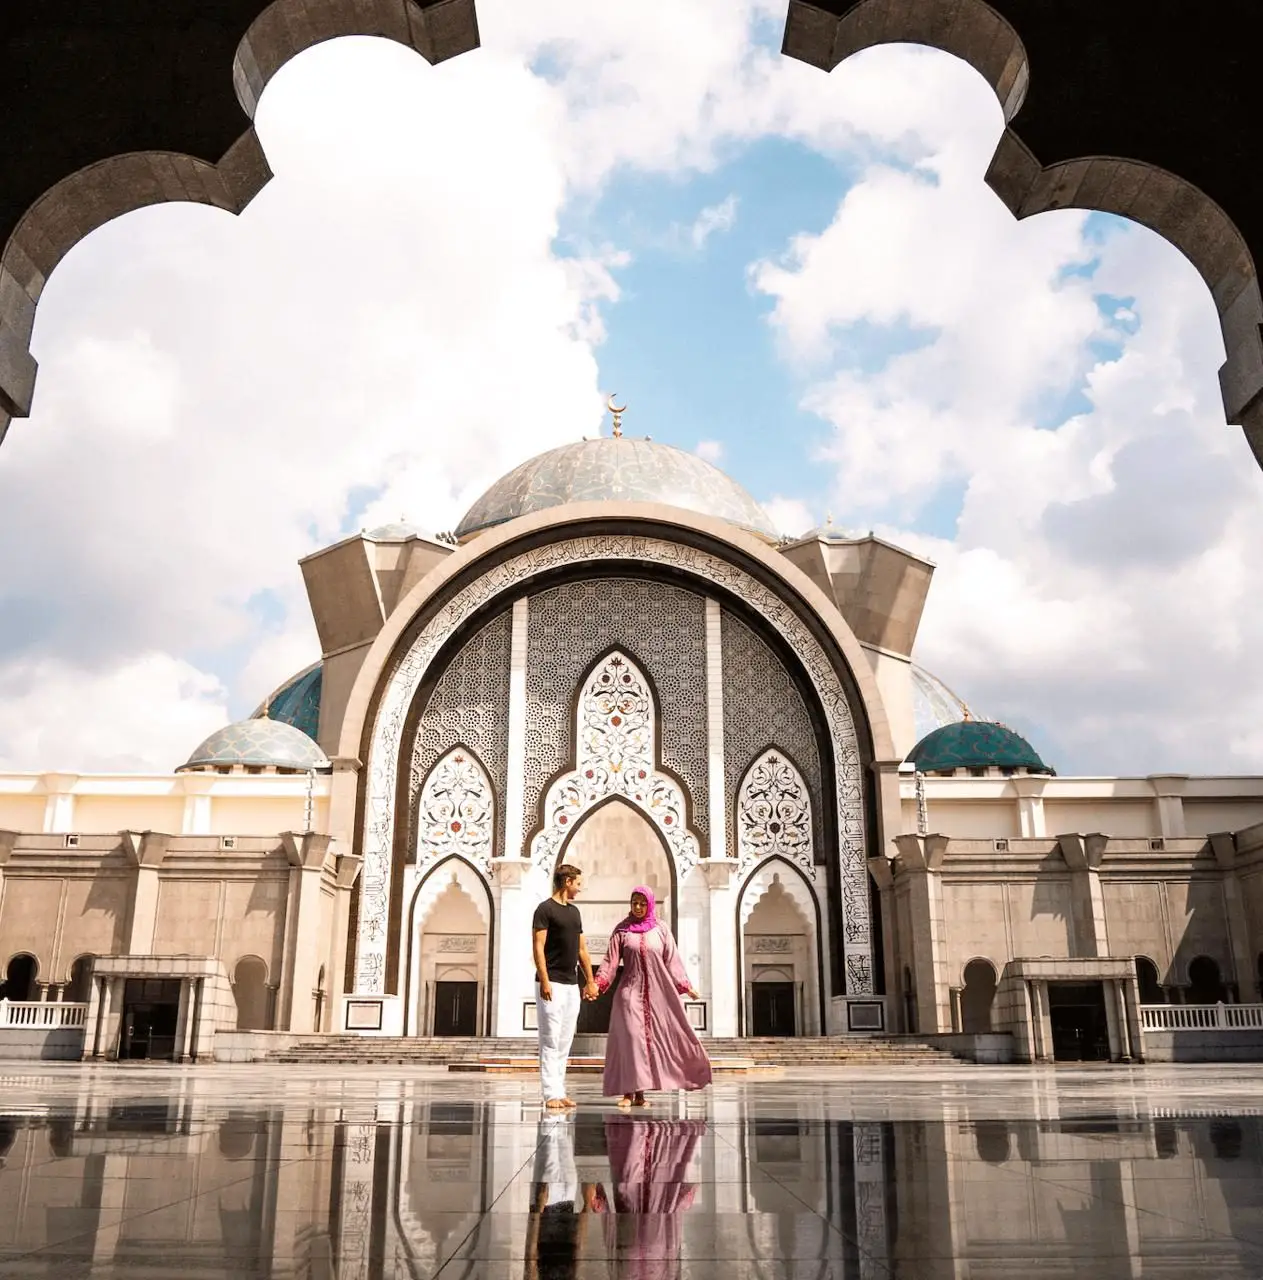 Masjid Wilayah Persekutuan - The Federal Territory Mosque Kuala Lumpur